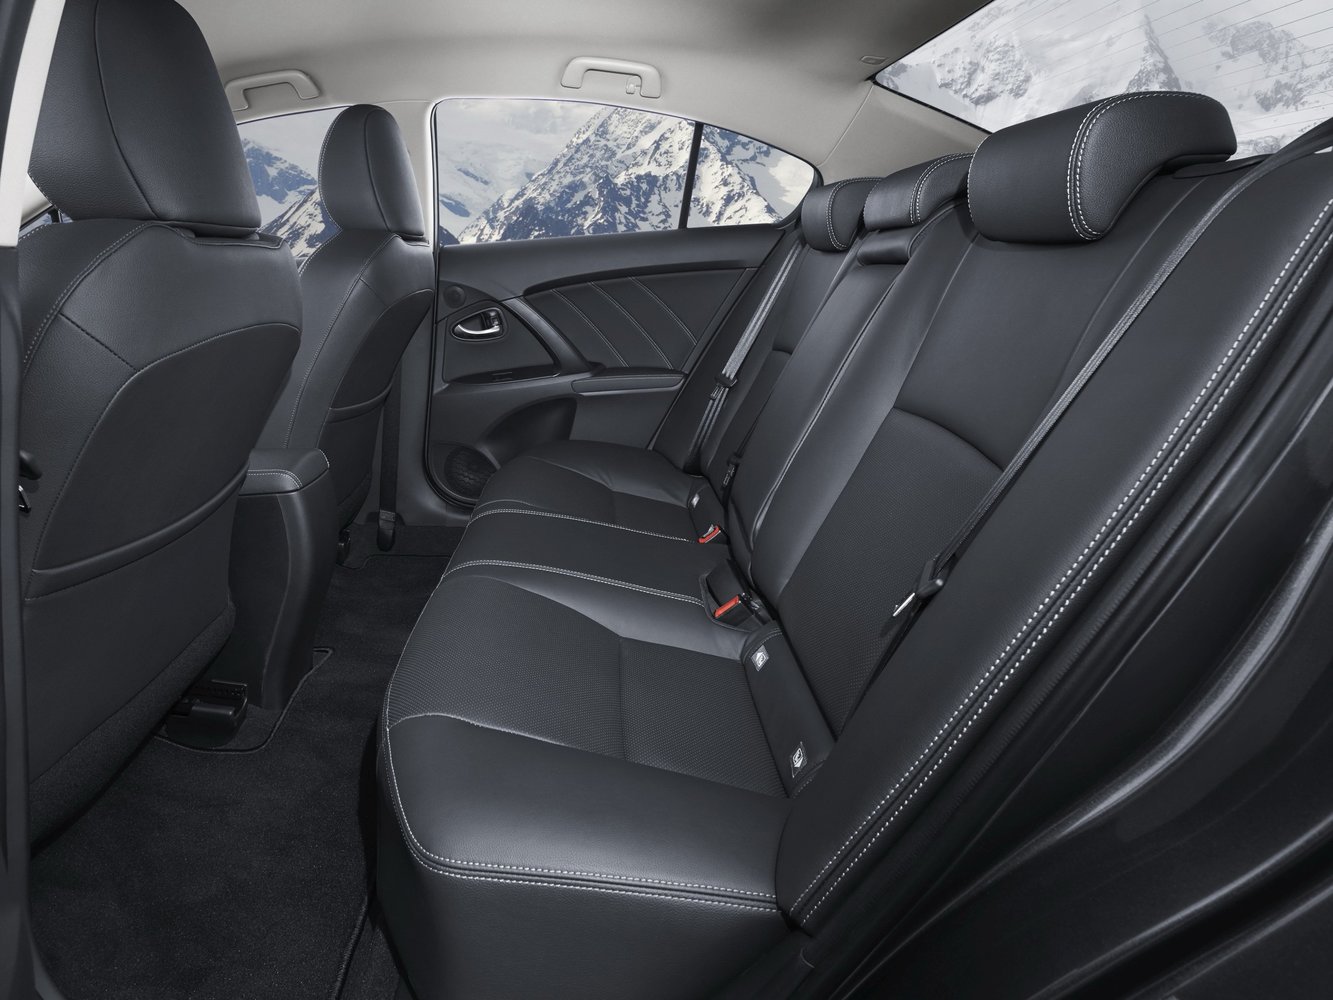 седан Toyota Avensis 2015 - 2016г выпуска модификация 1.6 MT (112 л.с.)